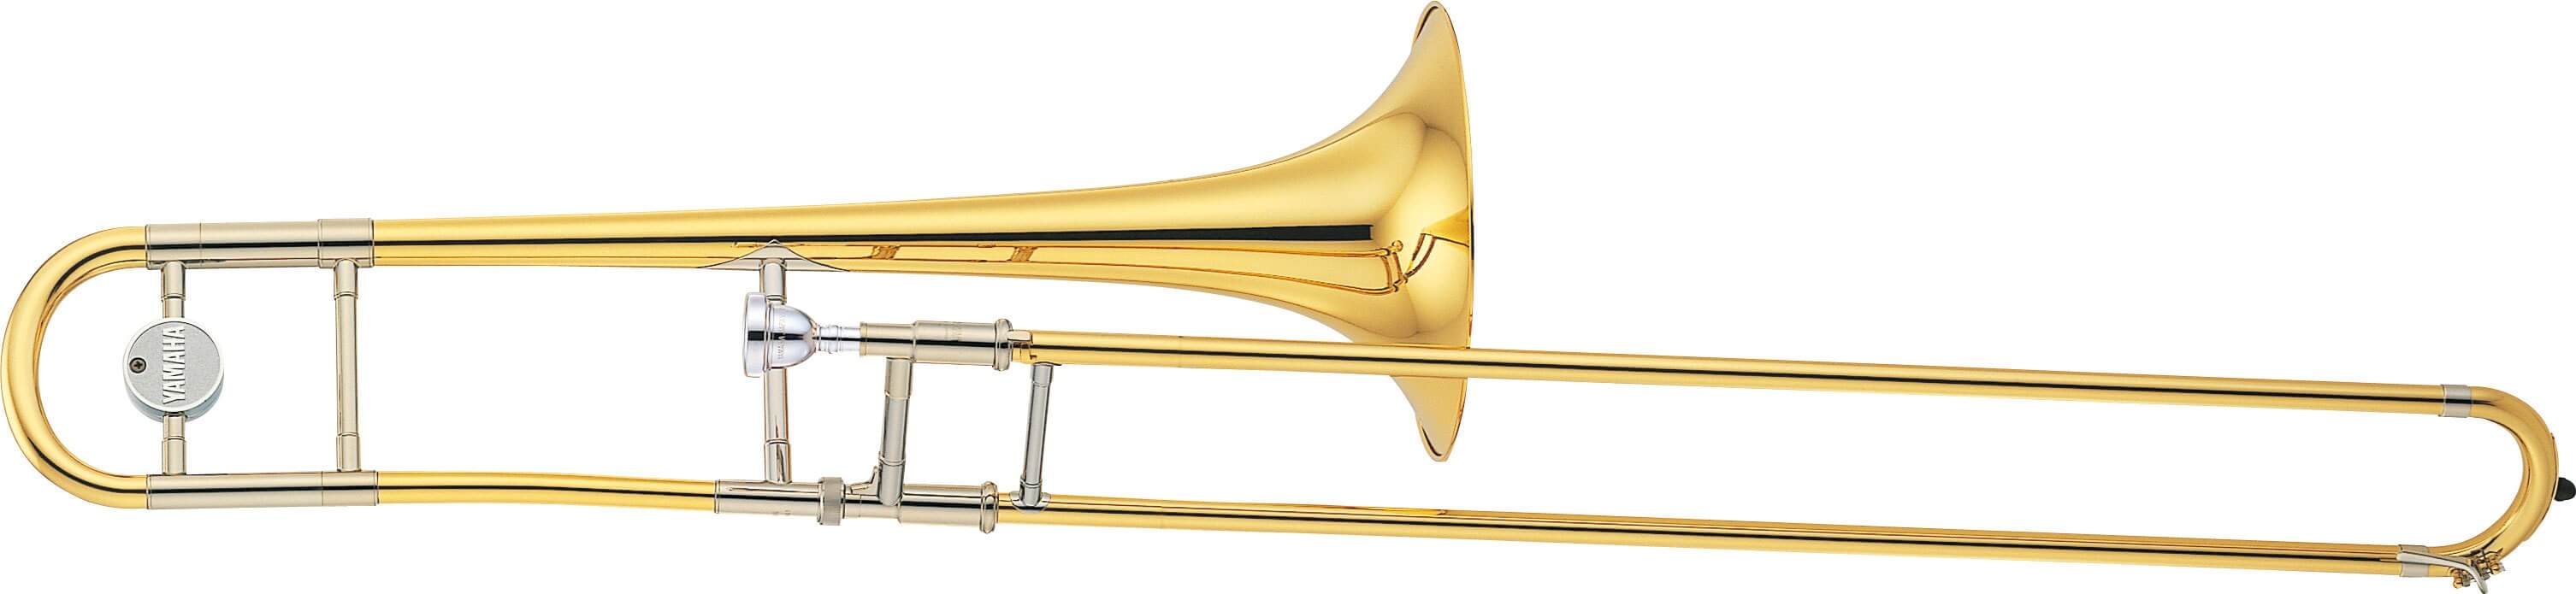 Trombon Tenor/Bajo Yamaha Ysl-630